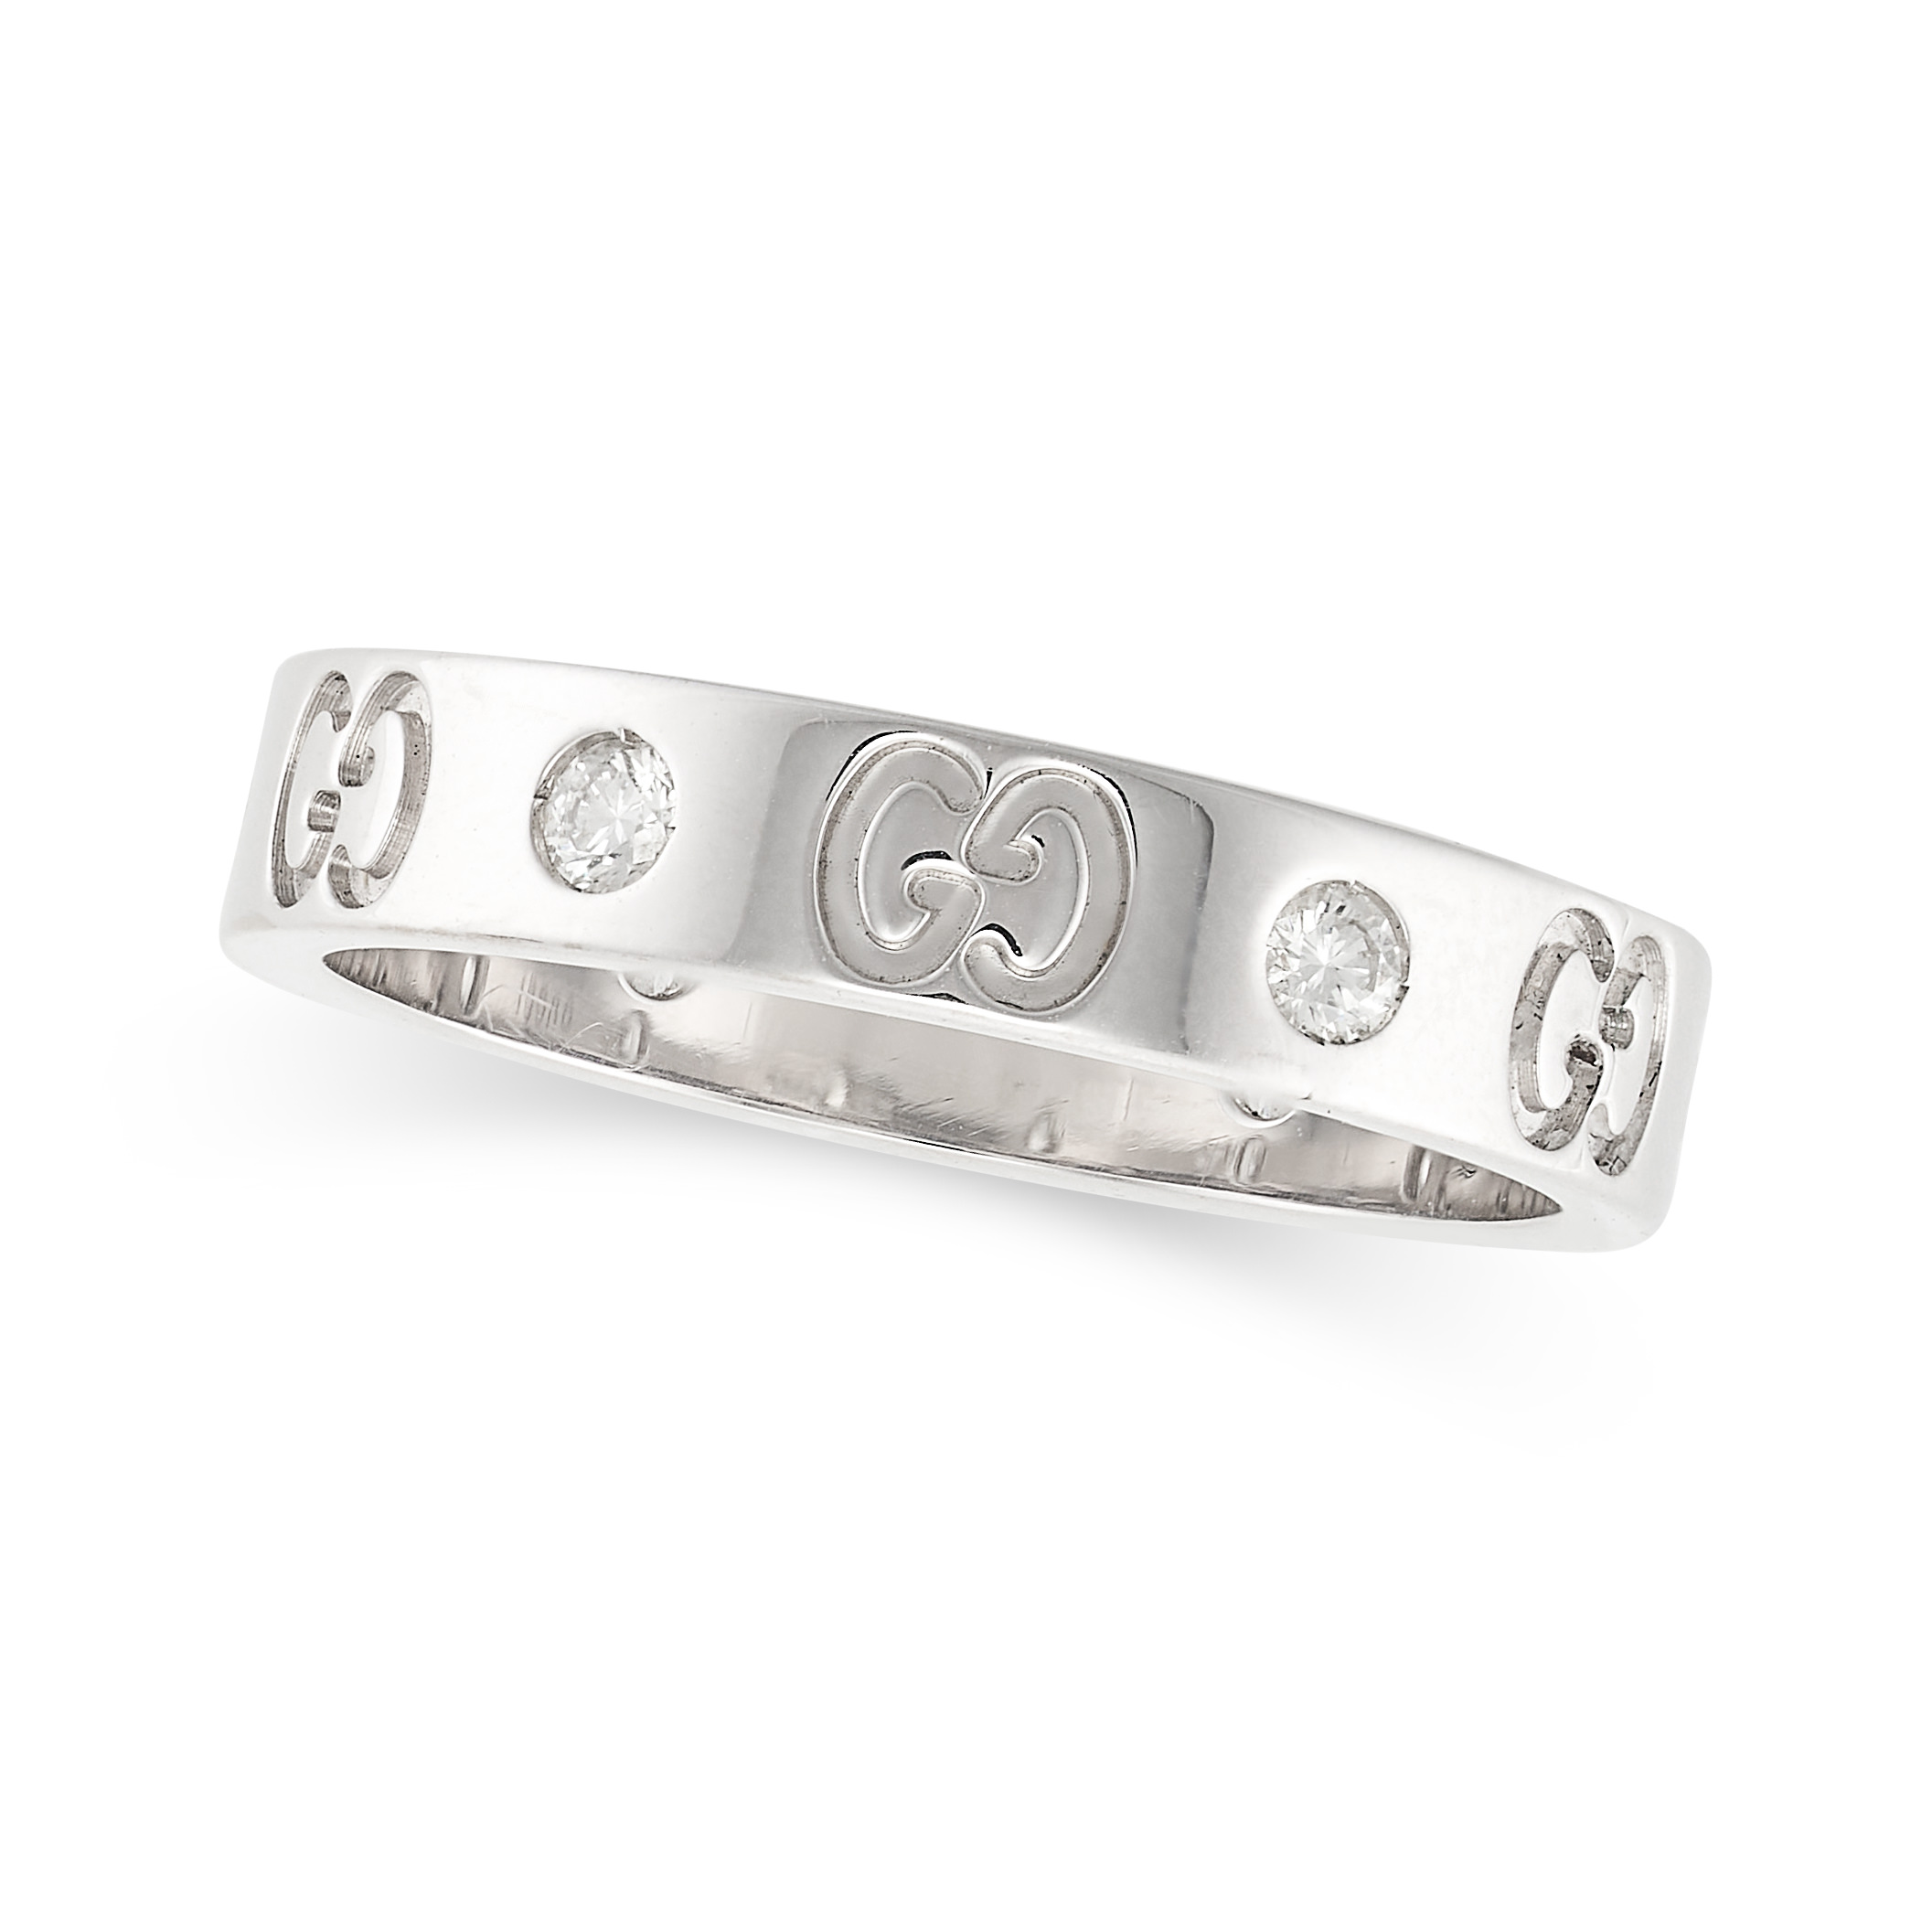 GUCCI, A DIAMOND MONOGRAM RING in 18ct white gold, set with alternating round brilliant cut diamonds